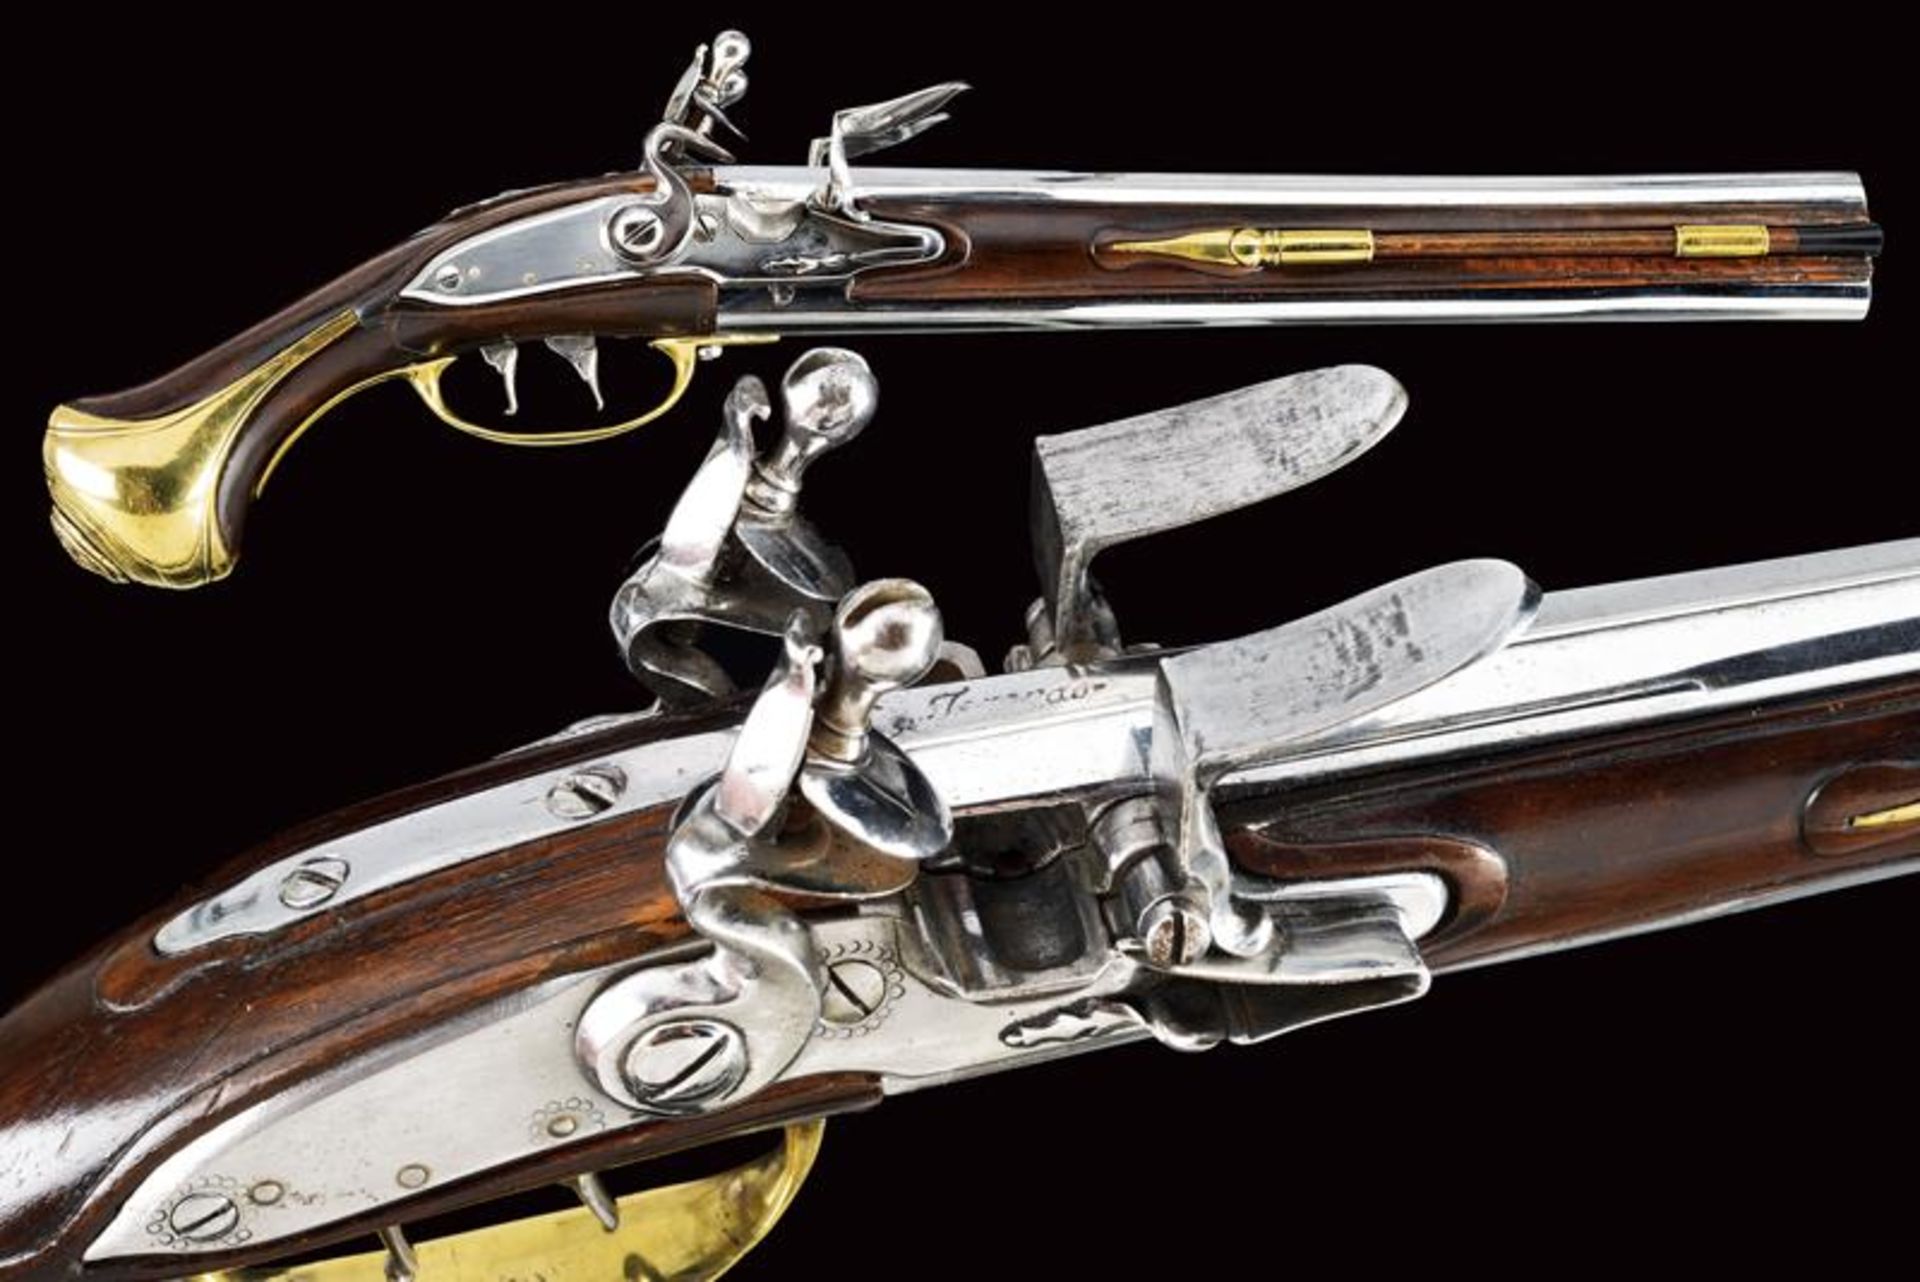 An over-and under-barreled flintlock pistol